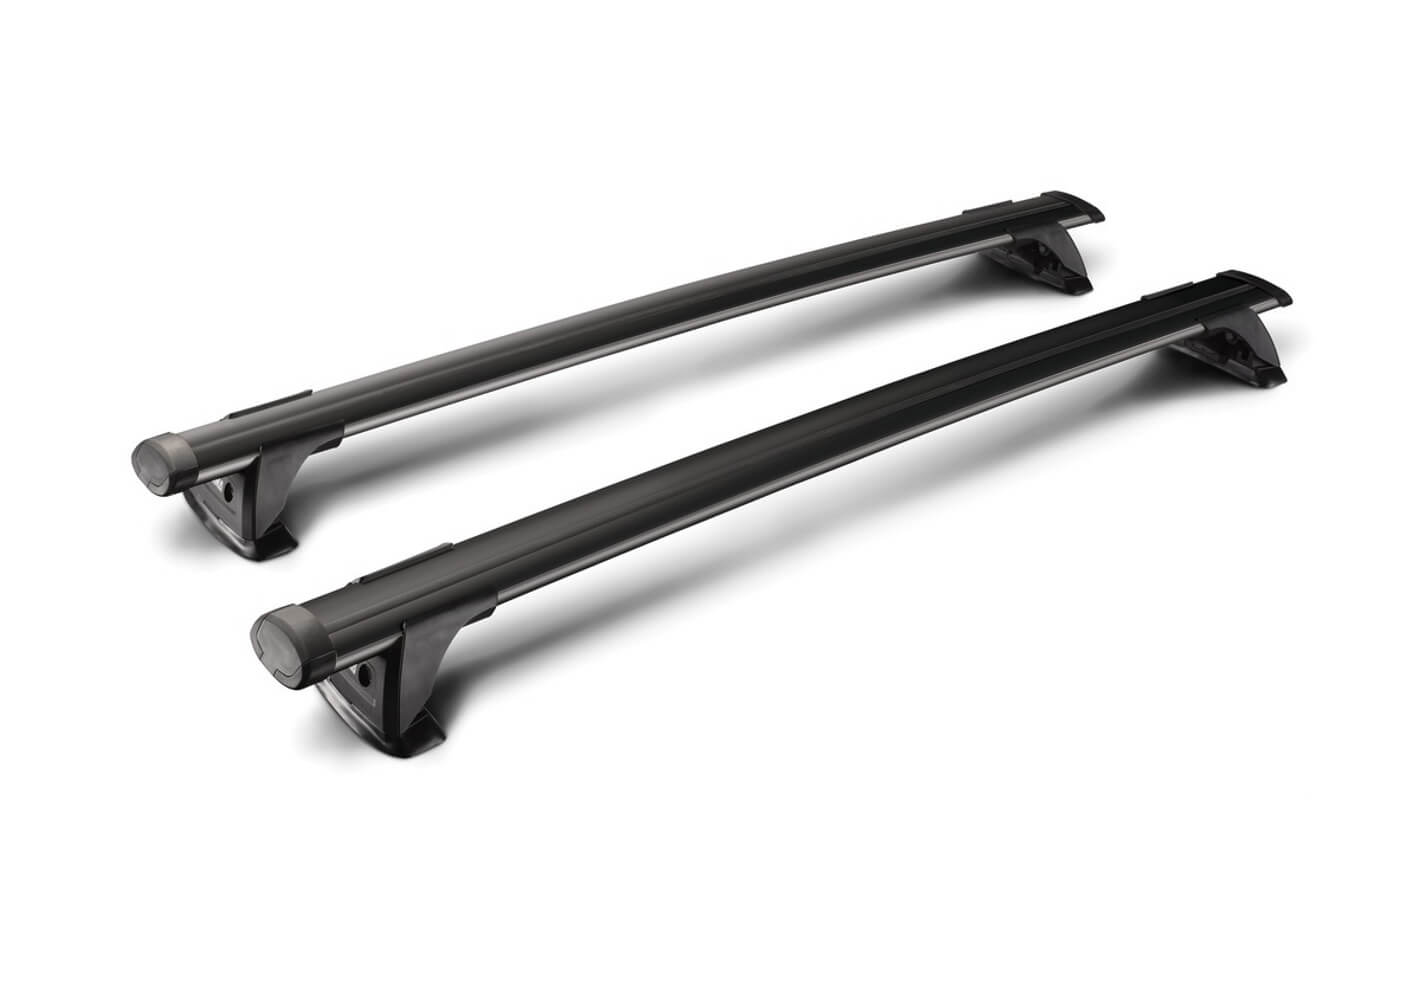 Subaru WRX STi four door saloon (2014 onwards):Yakima roof bars package - S16B black bars with K789 kit